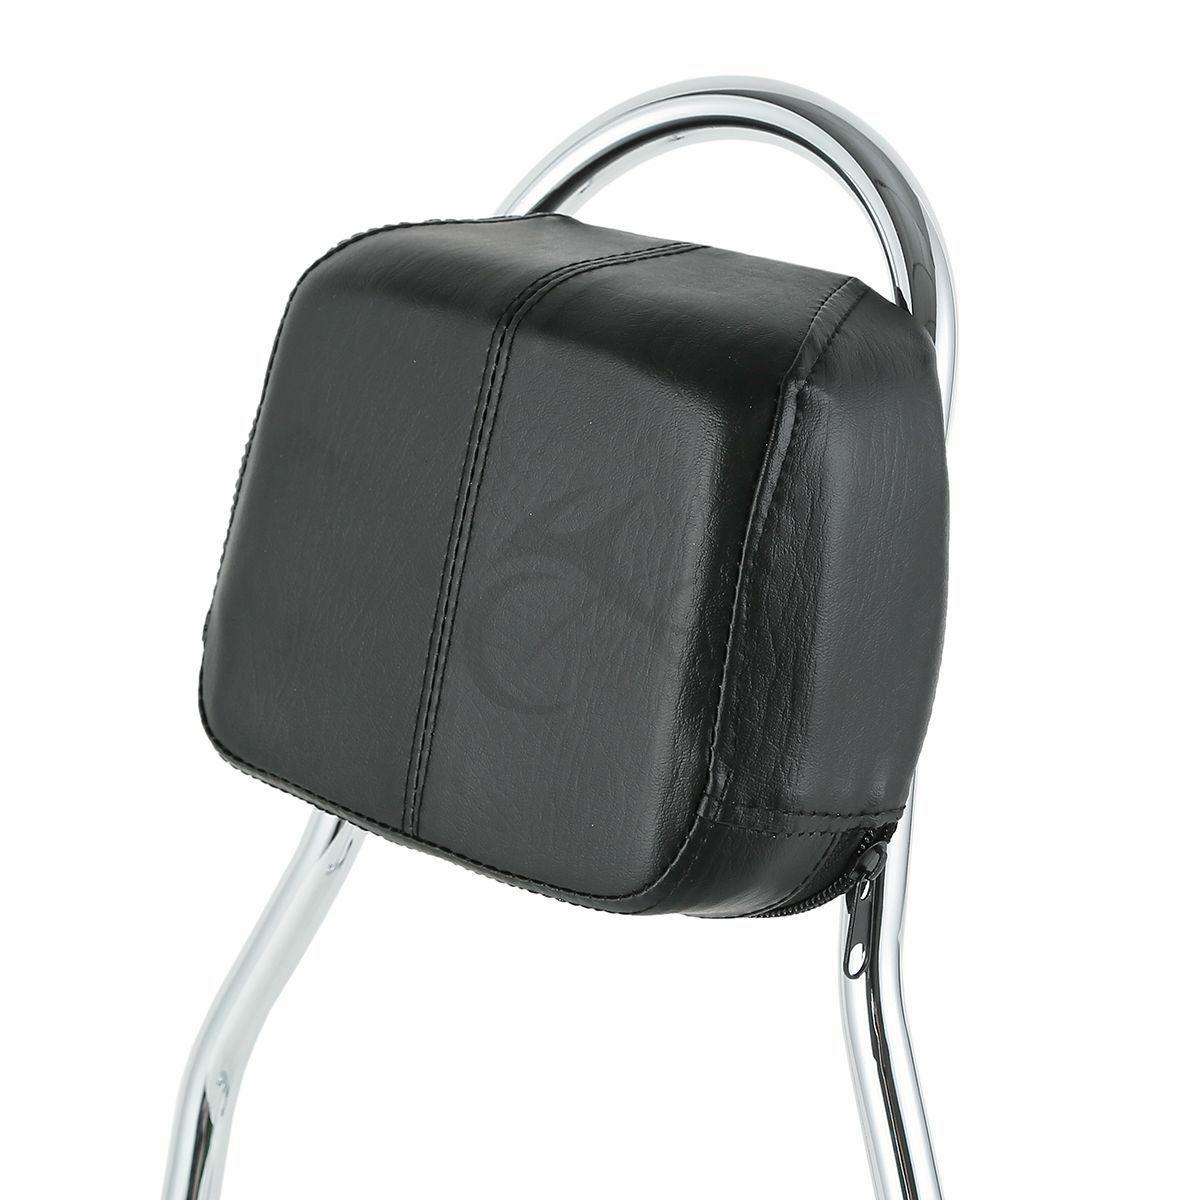 Chrome Detachable Sissy Bar Backrest Fit For Harley Softail FLSTN FLSTNSE 05-18 - Moto Life Products